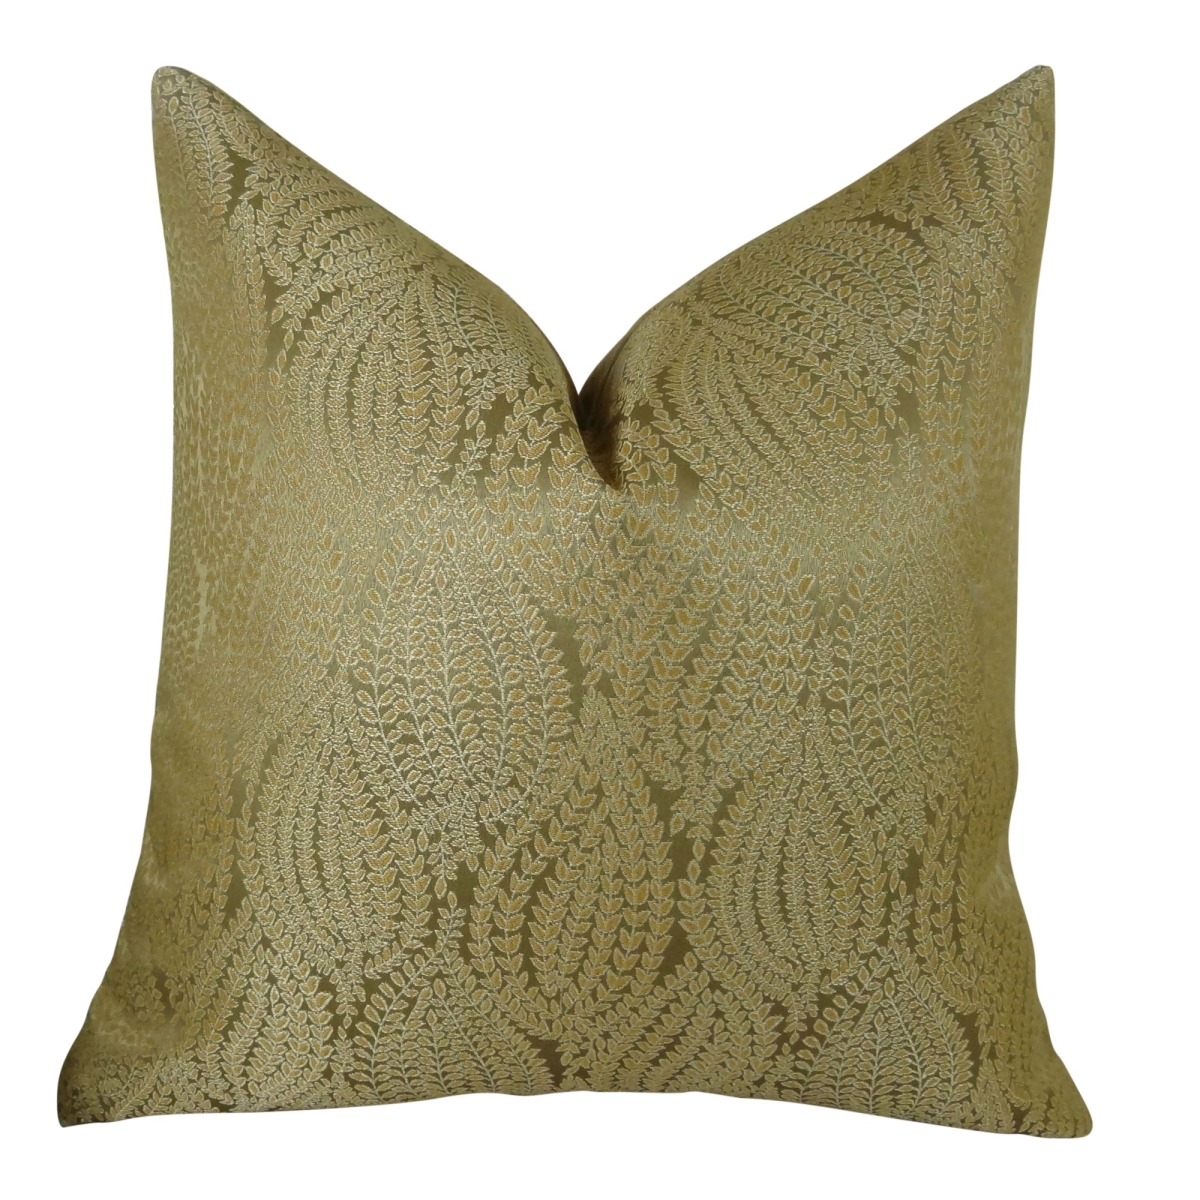 Pb11015-1818-sp Leaf Pod Handmade Throw Pillow, Gold - 18 X 18 In.